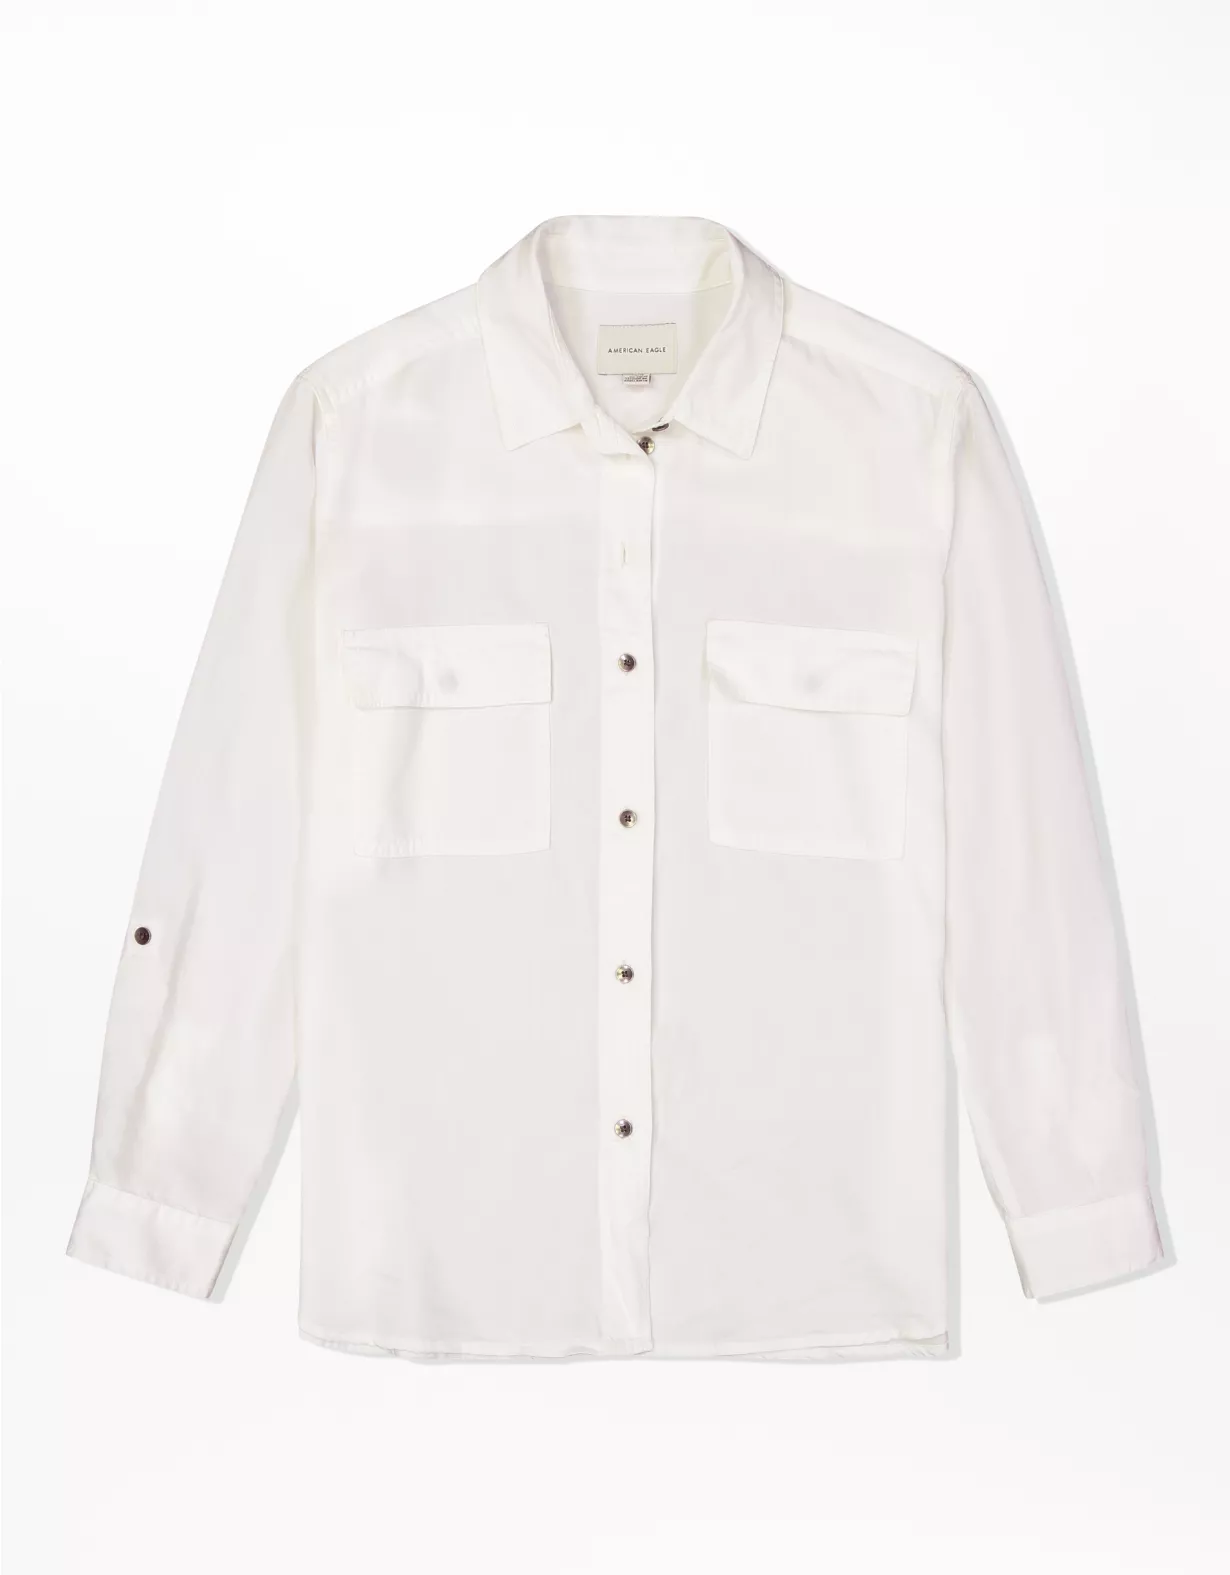 AE Button-Up Shirt